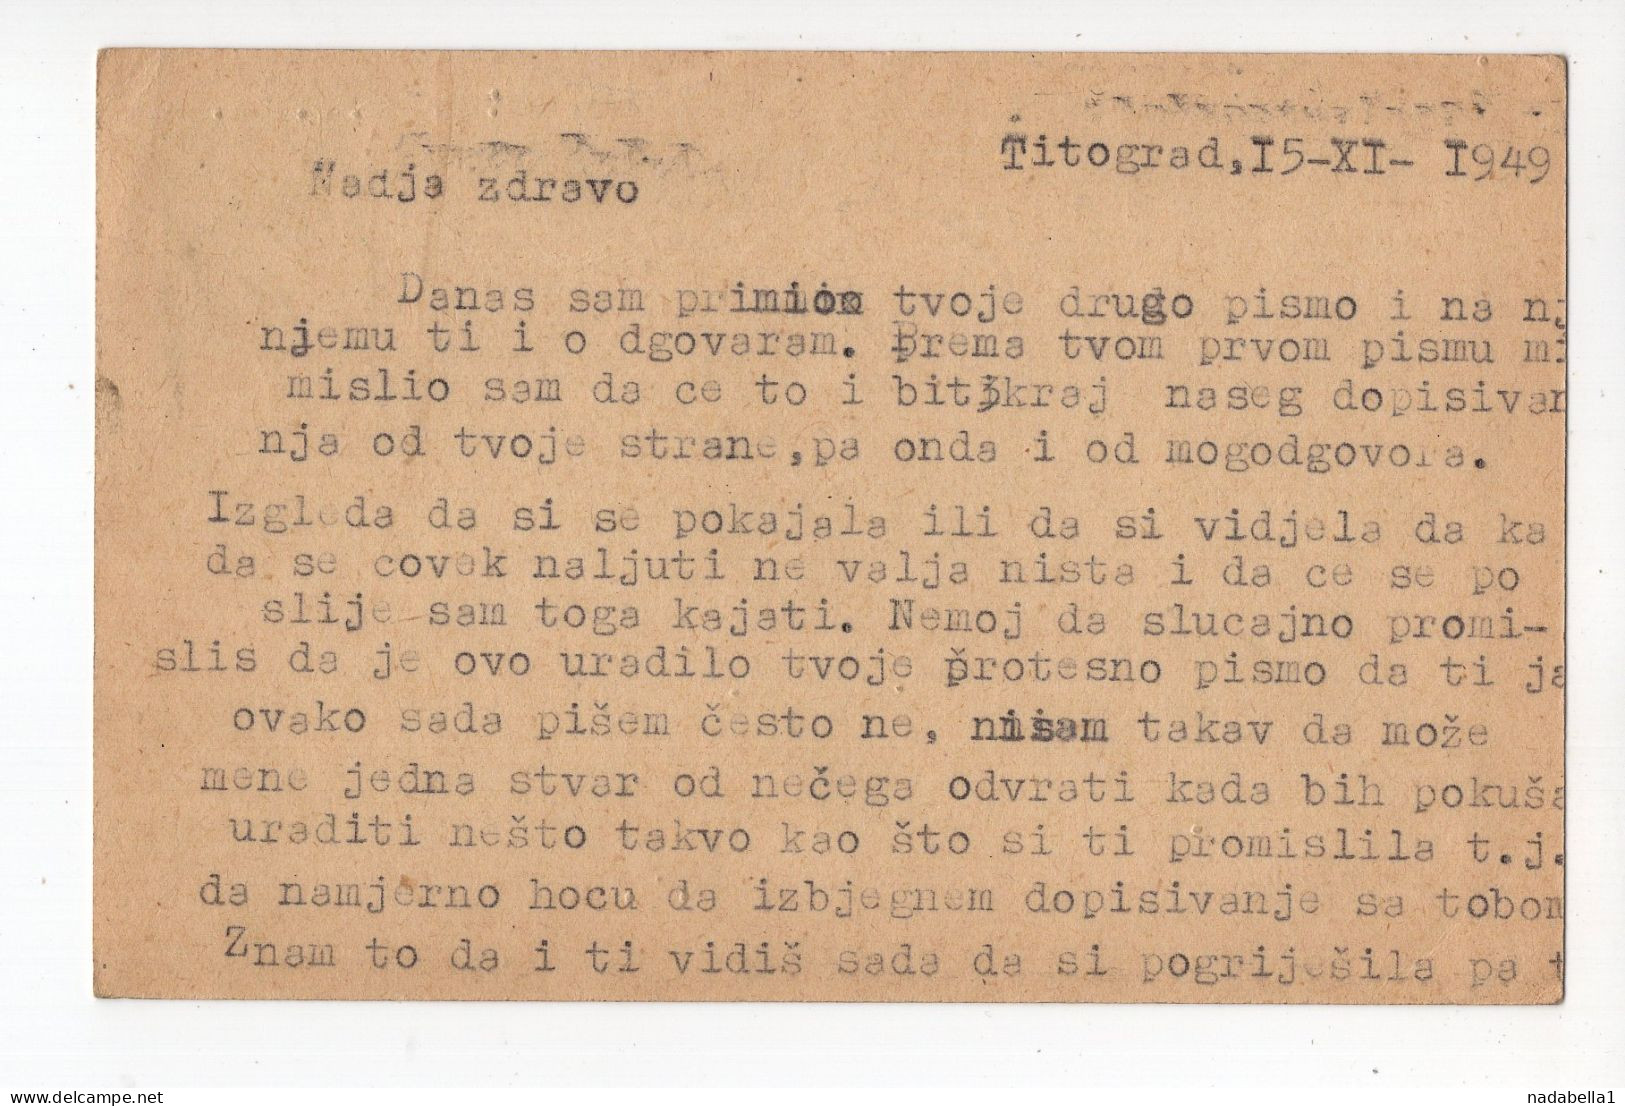 1949. YUGOSLAVIA,MONTENEGRO,TITOGRAD,2 DIN POSTAGE DUE IN BELGRADE,2 DIN STATIONERY CARD,USED - Impuestos